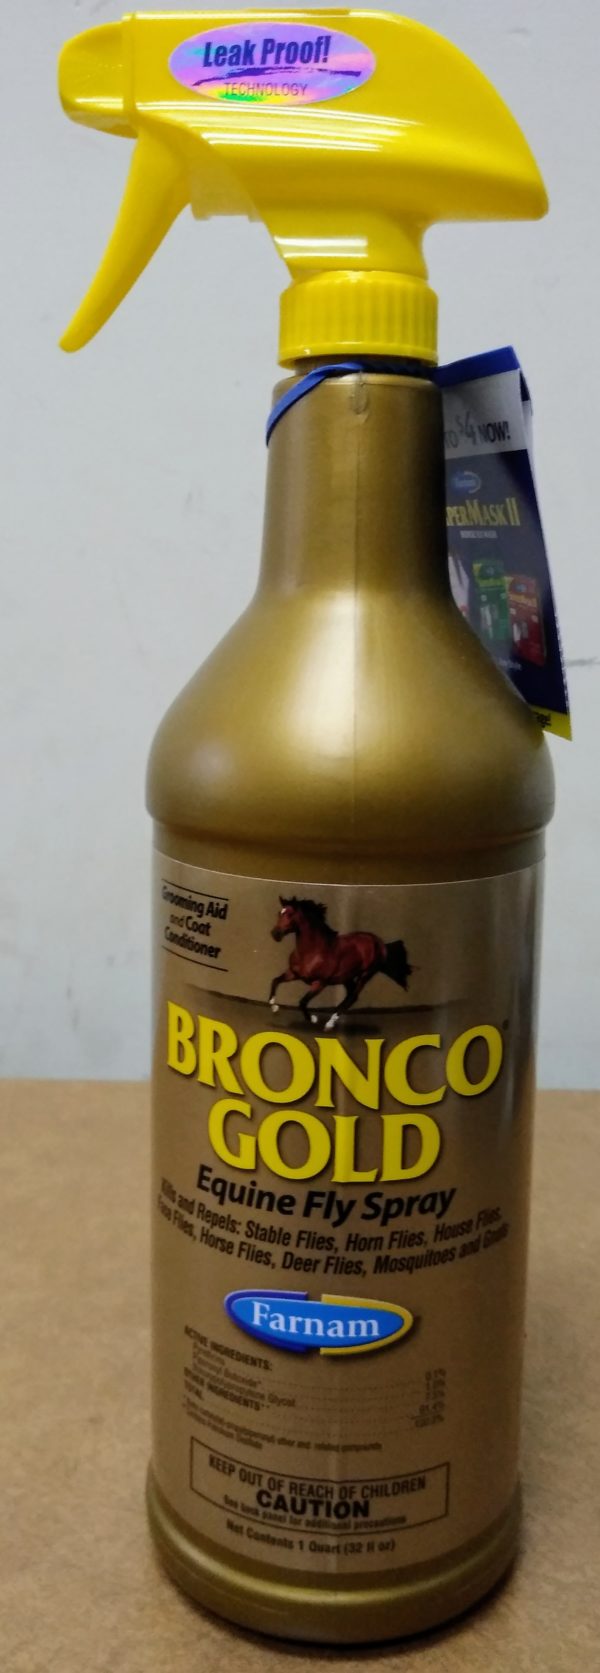 Bronco Gold Equine Fly Spray 32 OZ